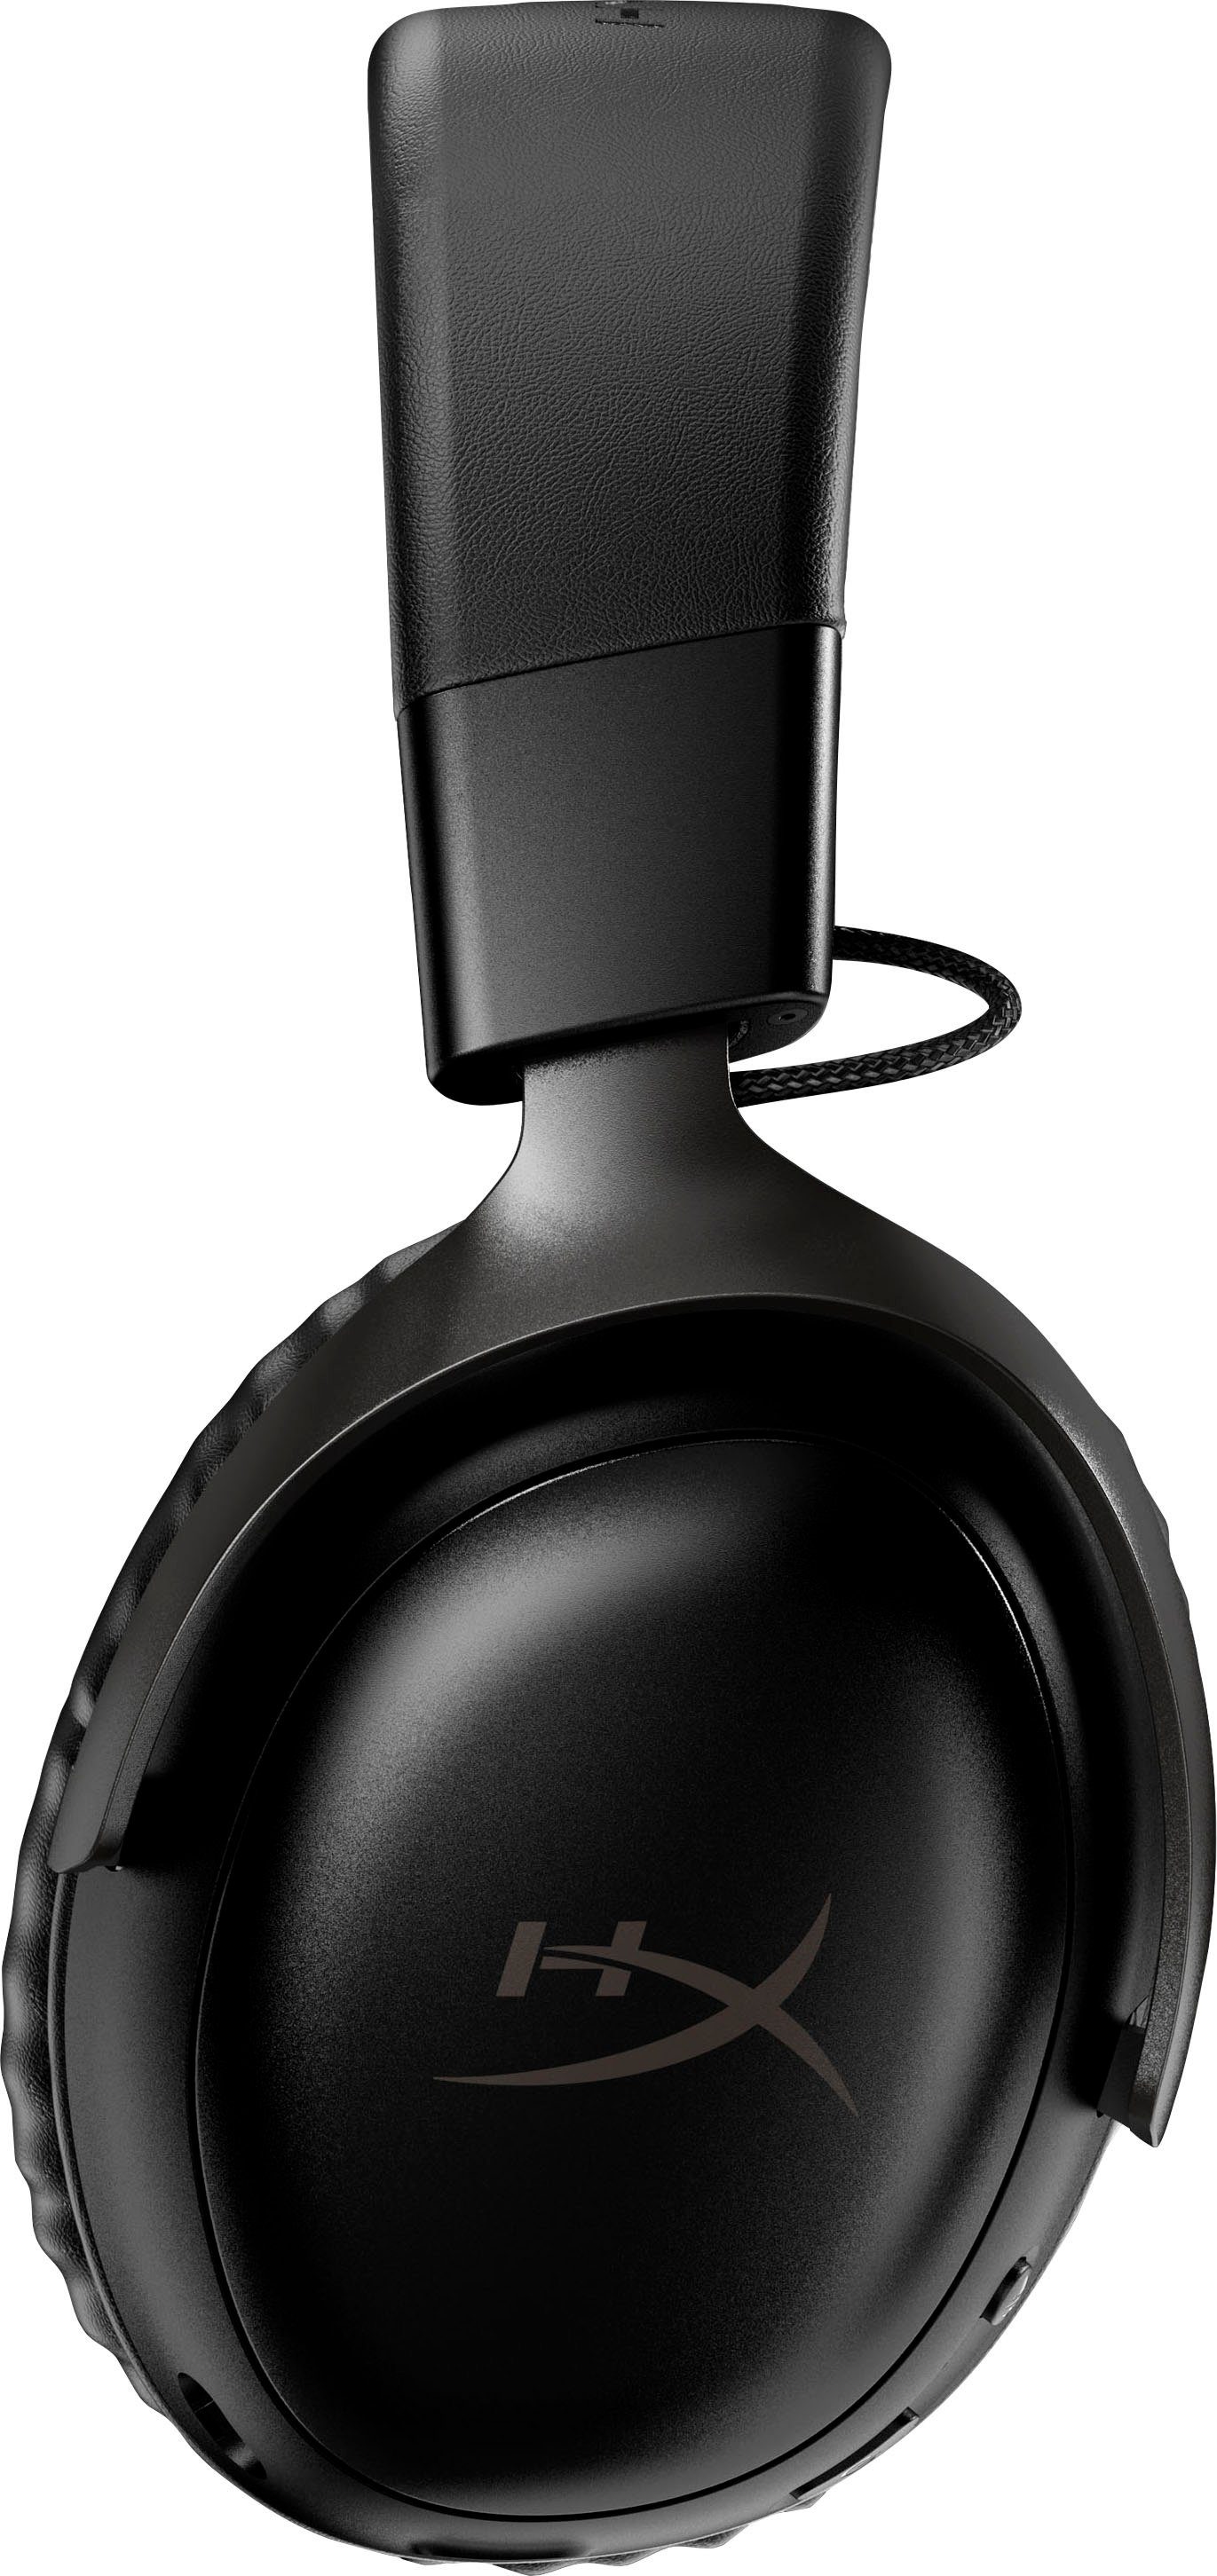 III (Geräuschisolierung, Wireless) schwarz Gaming-Headset Wireless HyperX Cloud